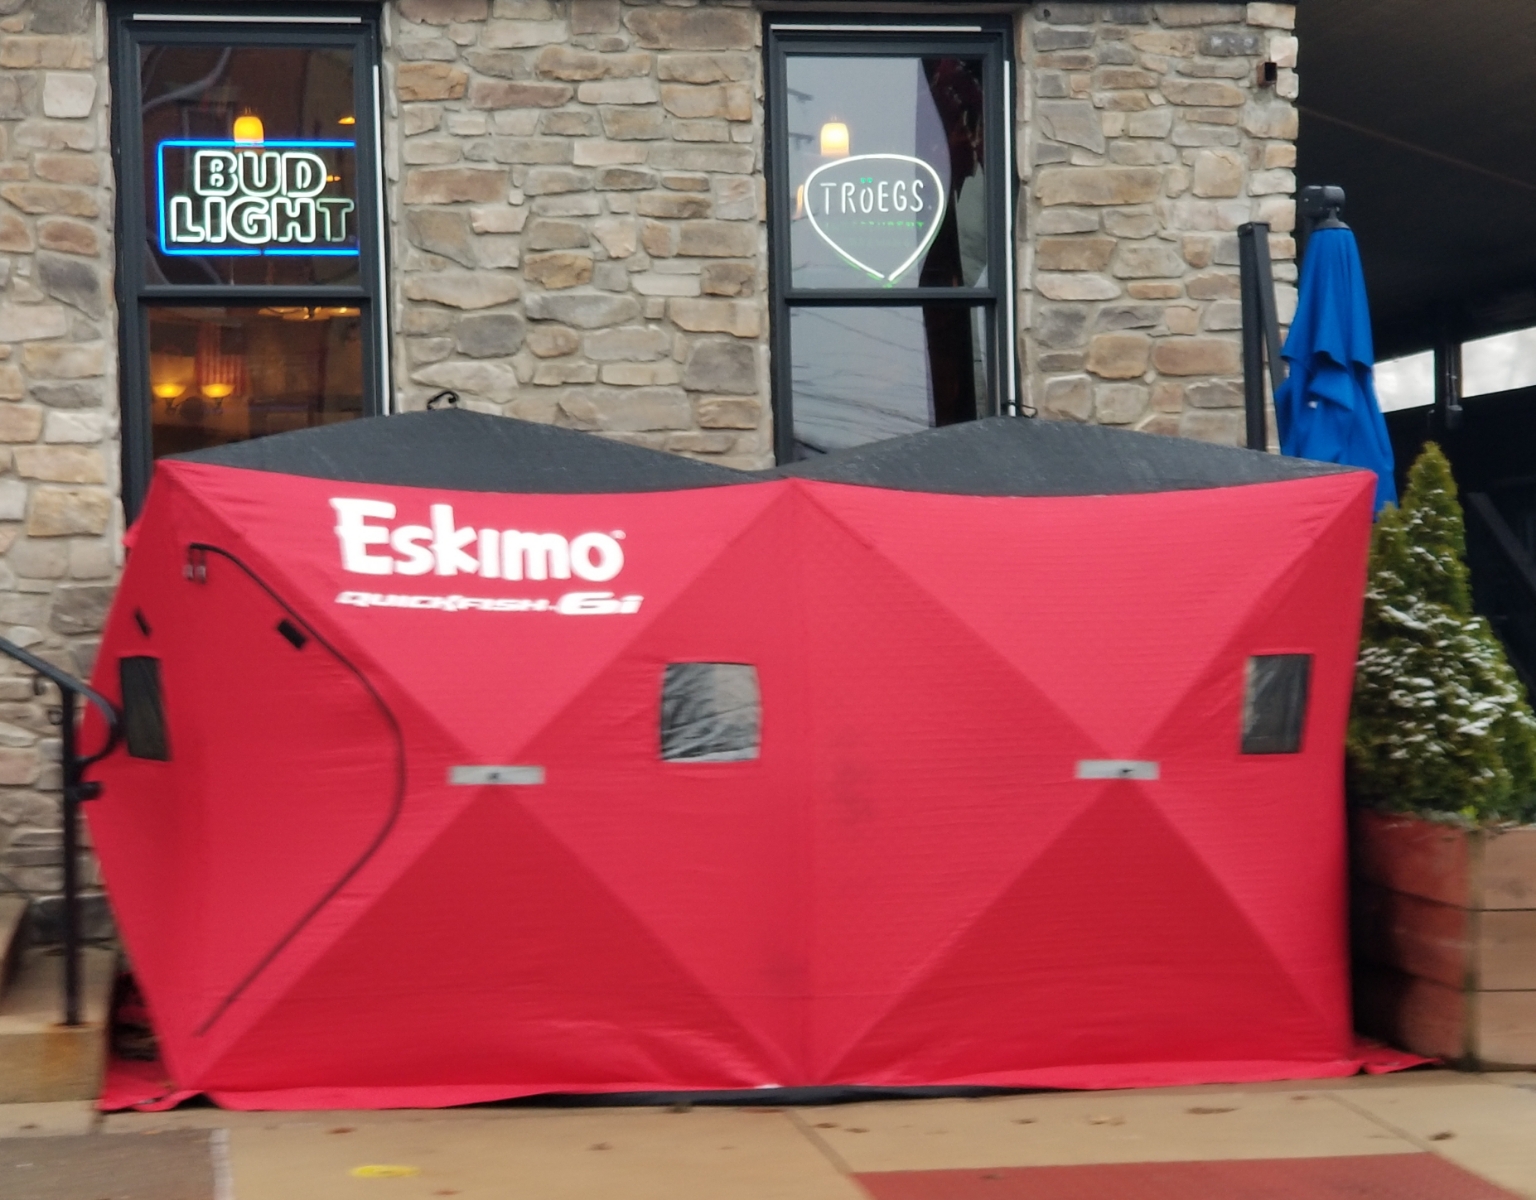  Eskimo Tent